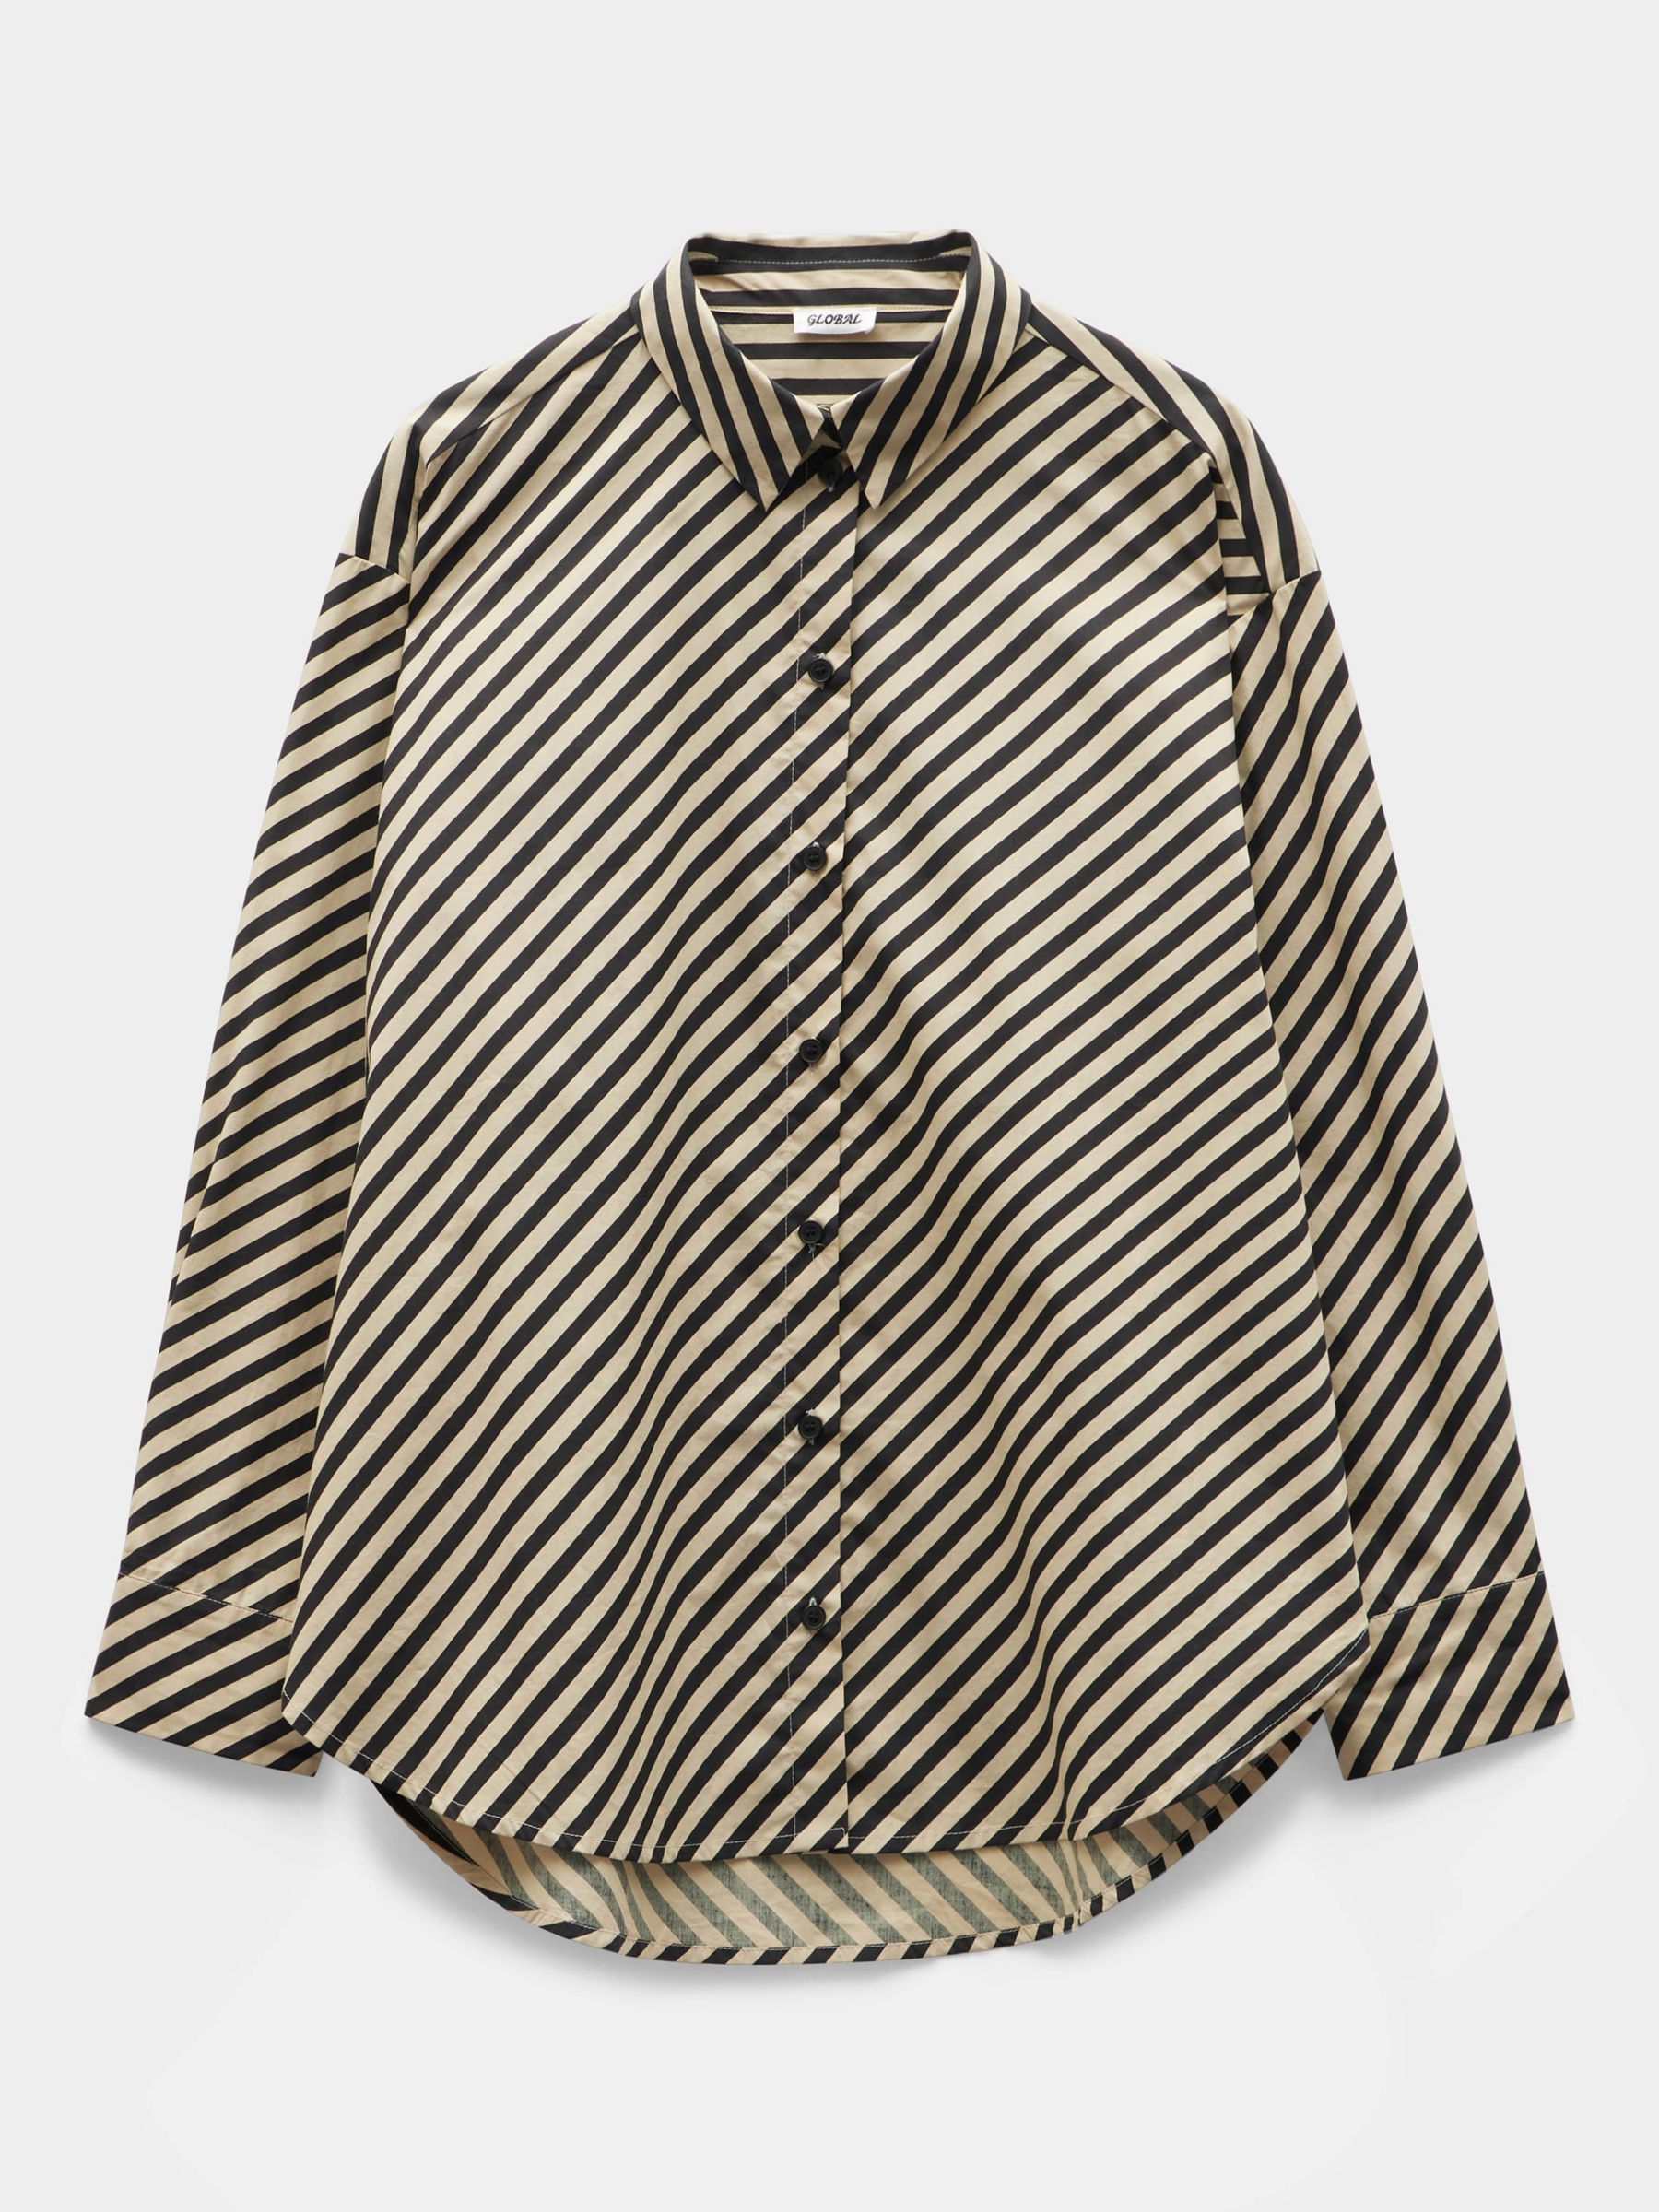 HUSH Pia Diagonal Stripe Shirt, Black/Beige at John Lewis & Partners